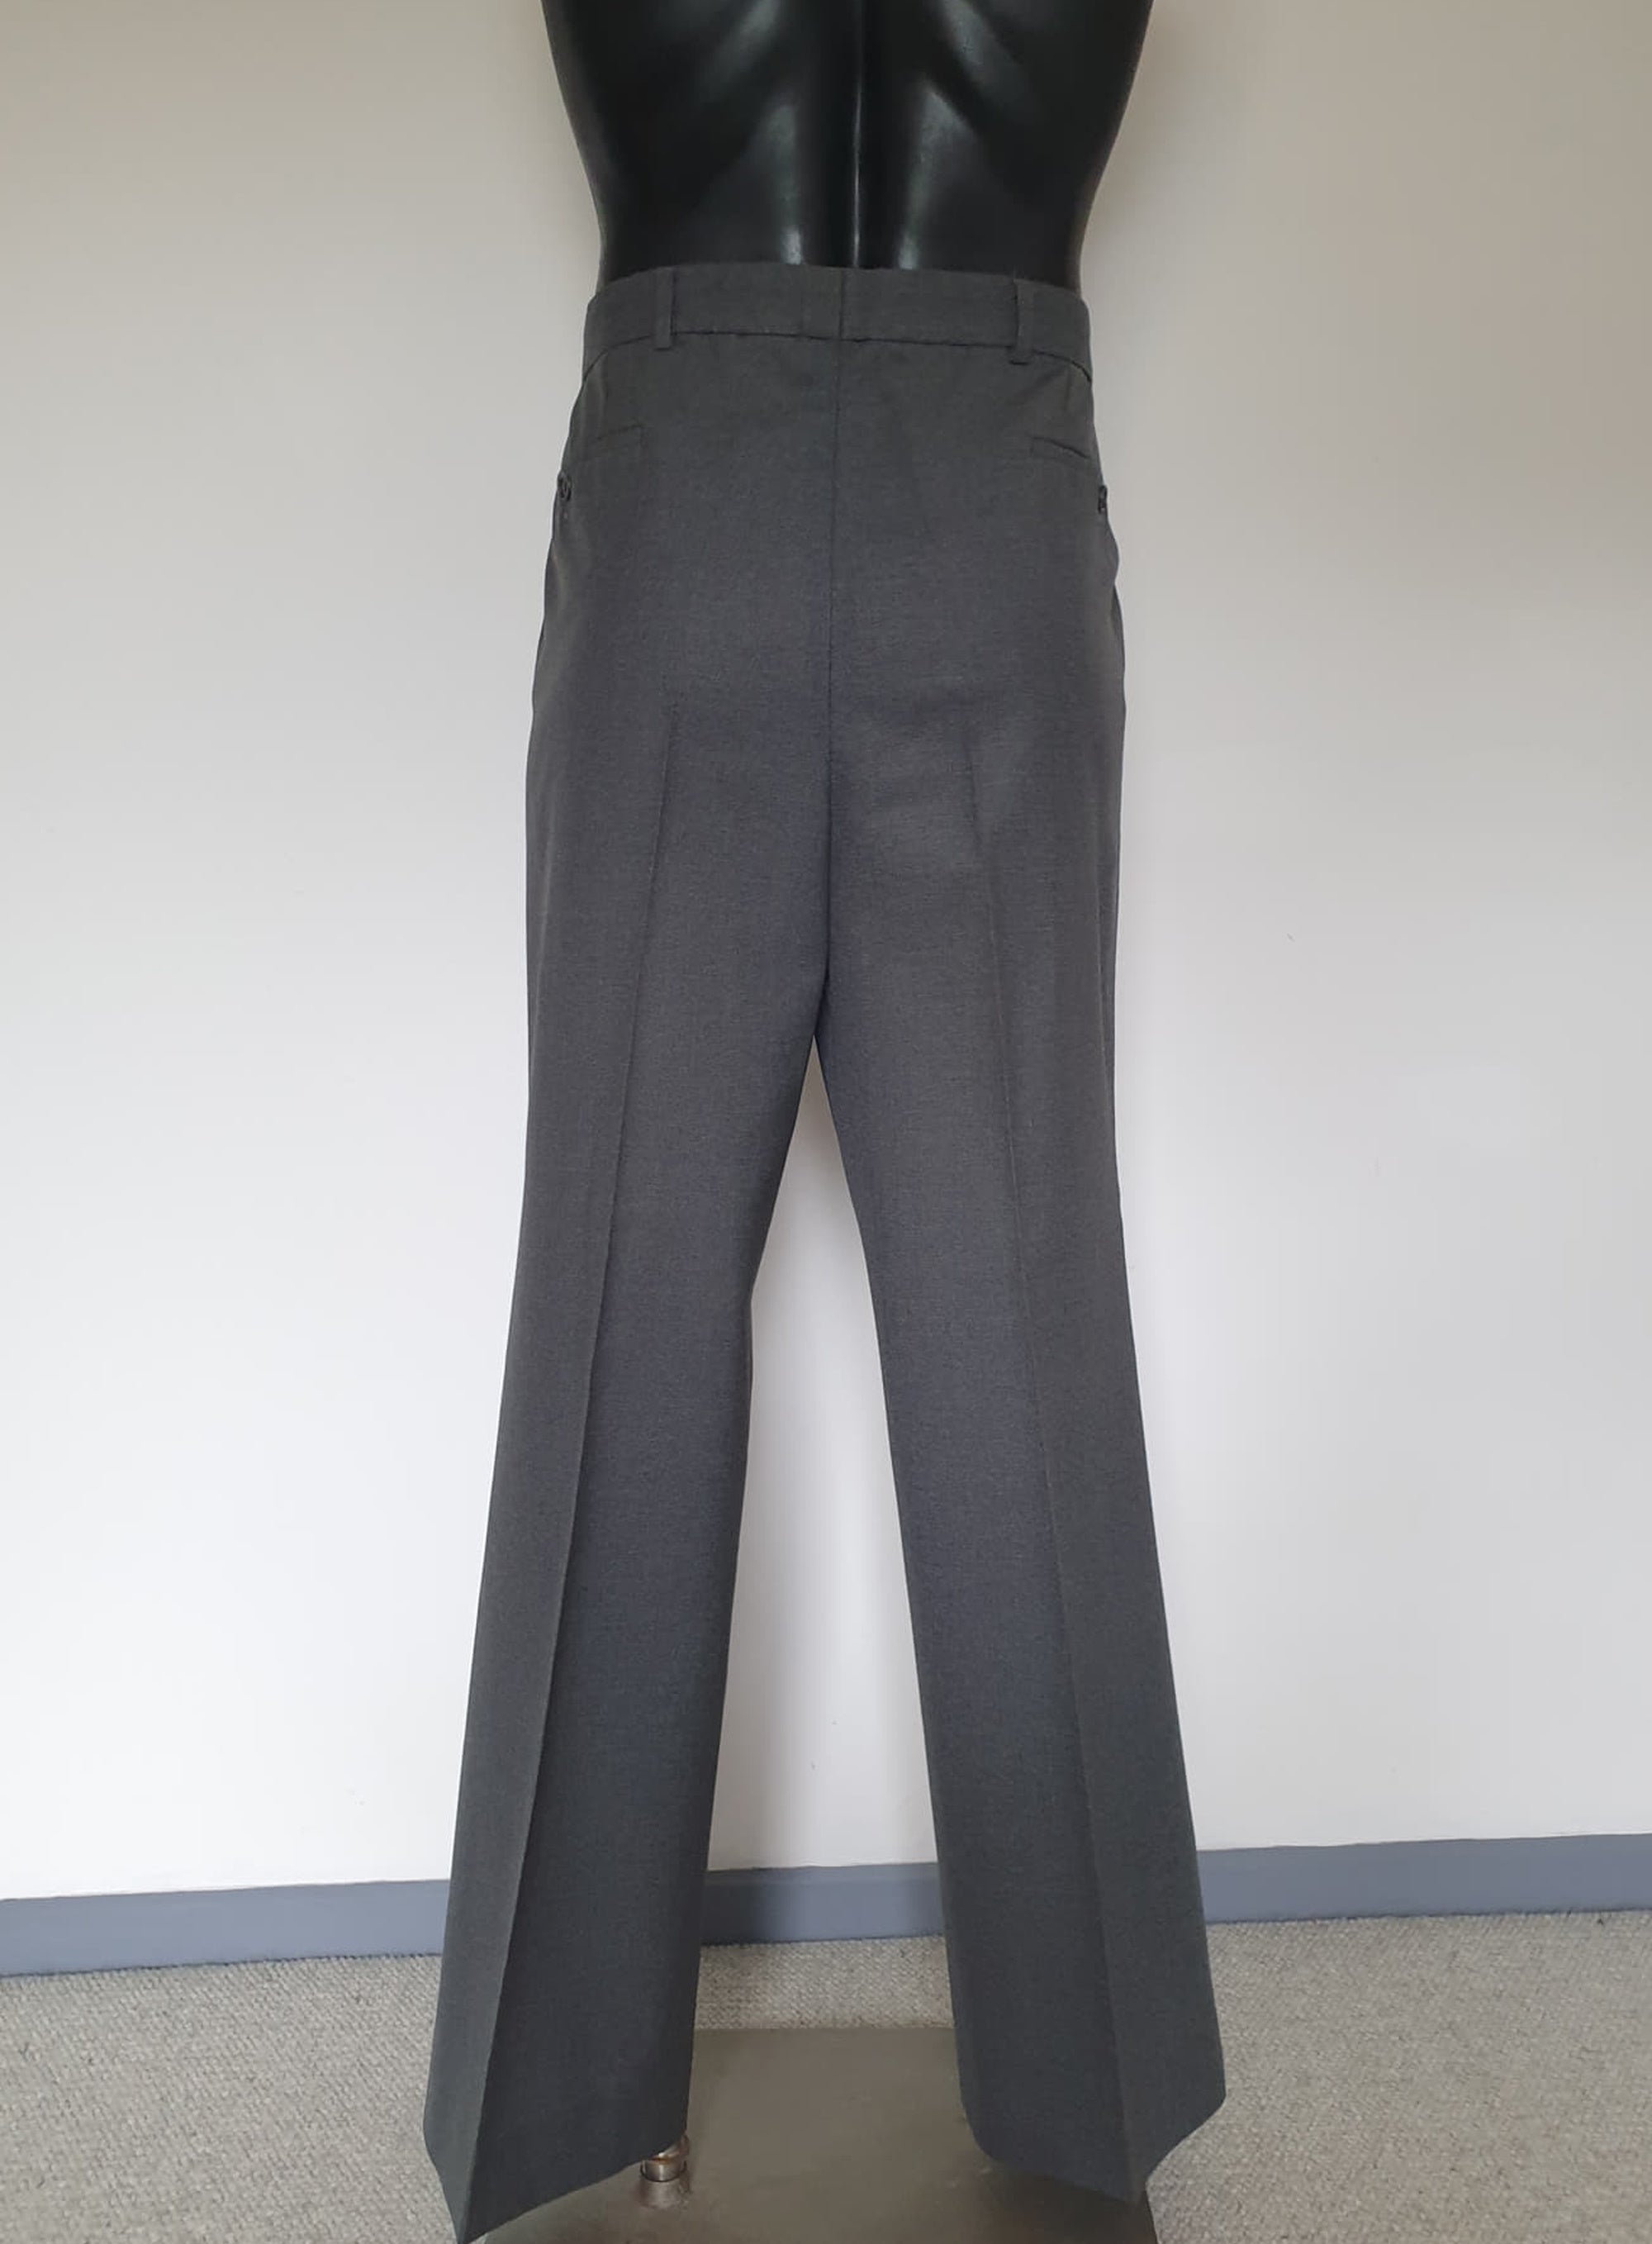 vintage grey wool blend tailored pants trousers by fletcher jones XL